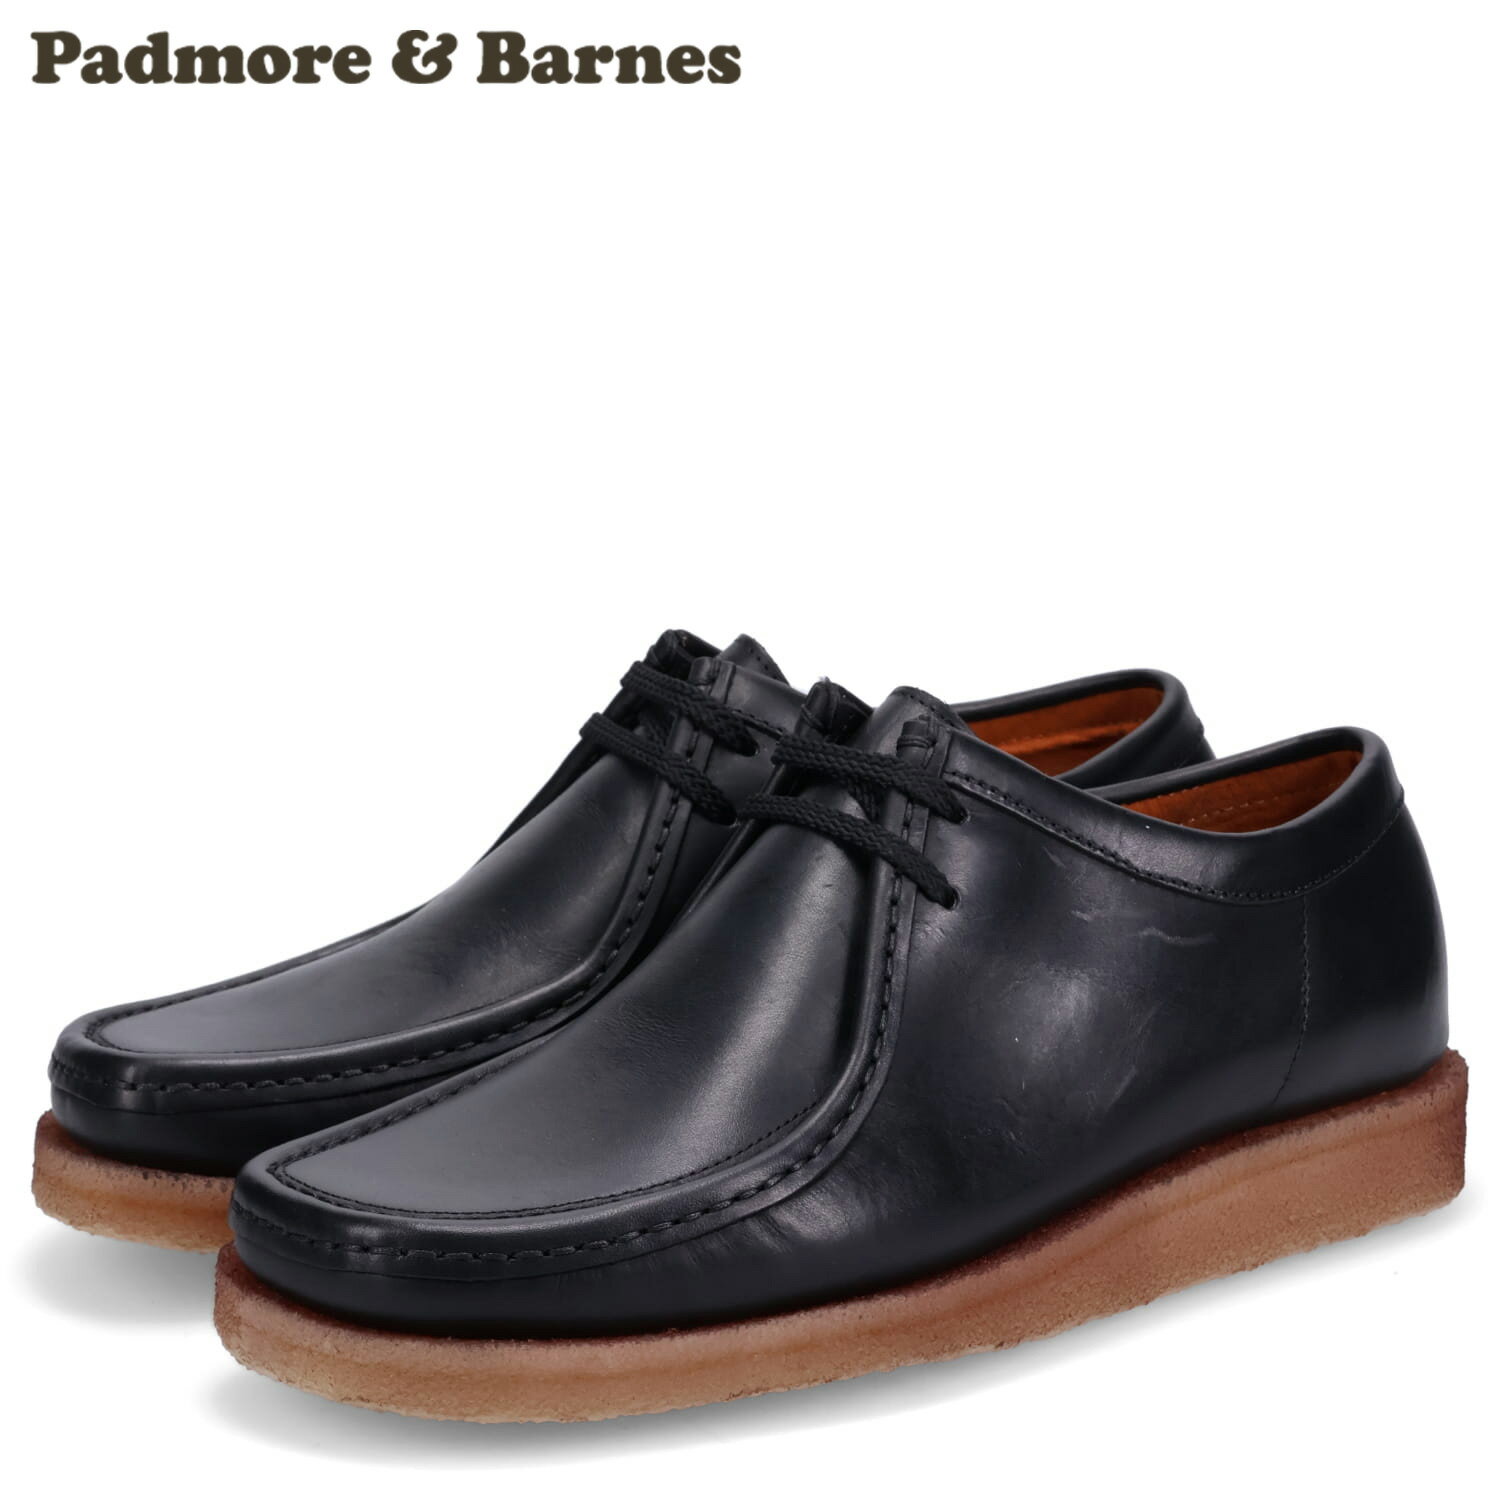 PADMORE&BARNES ORIGINAL パドモアアンドバーンズ ワラビー ブーツ オリジナル メンズ ブラック 黒 P204